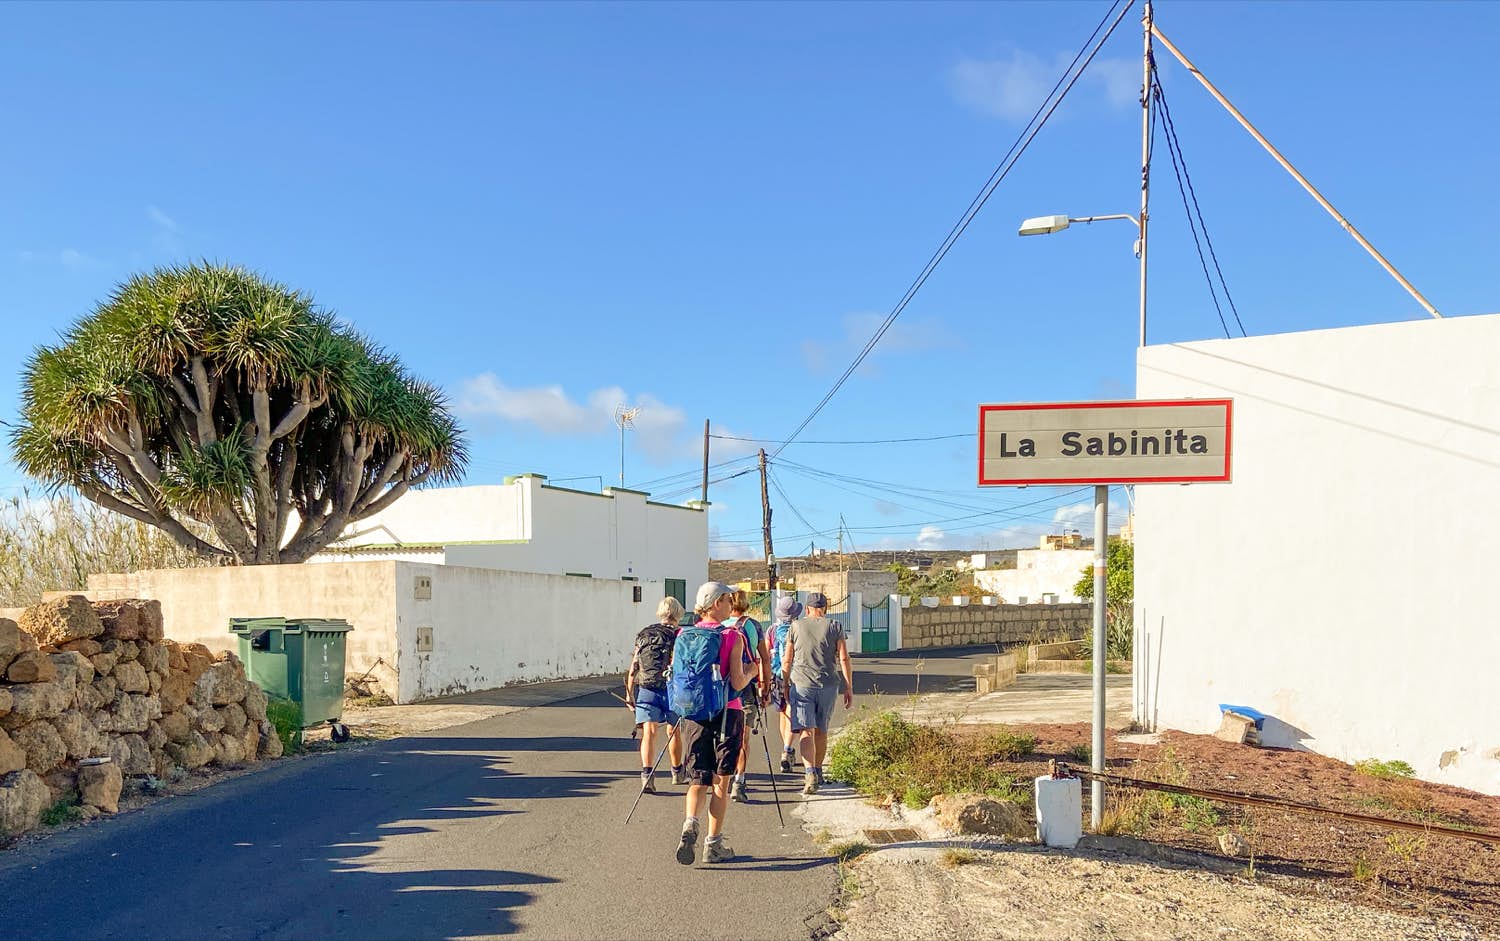 Wanderung durch La Sabinita